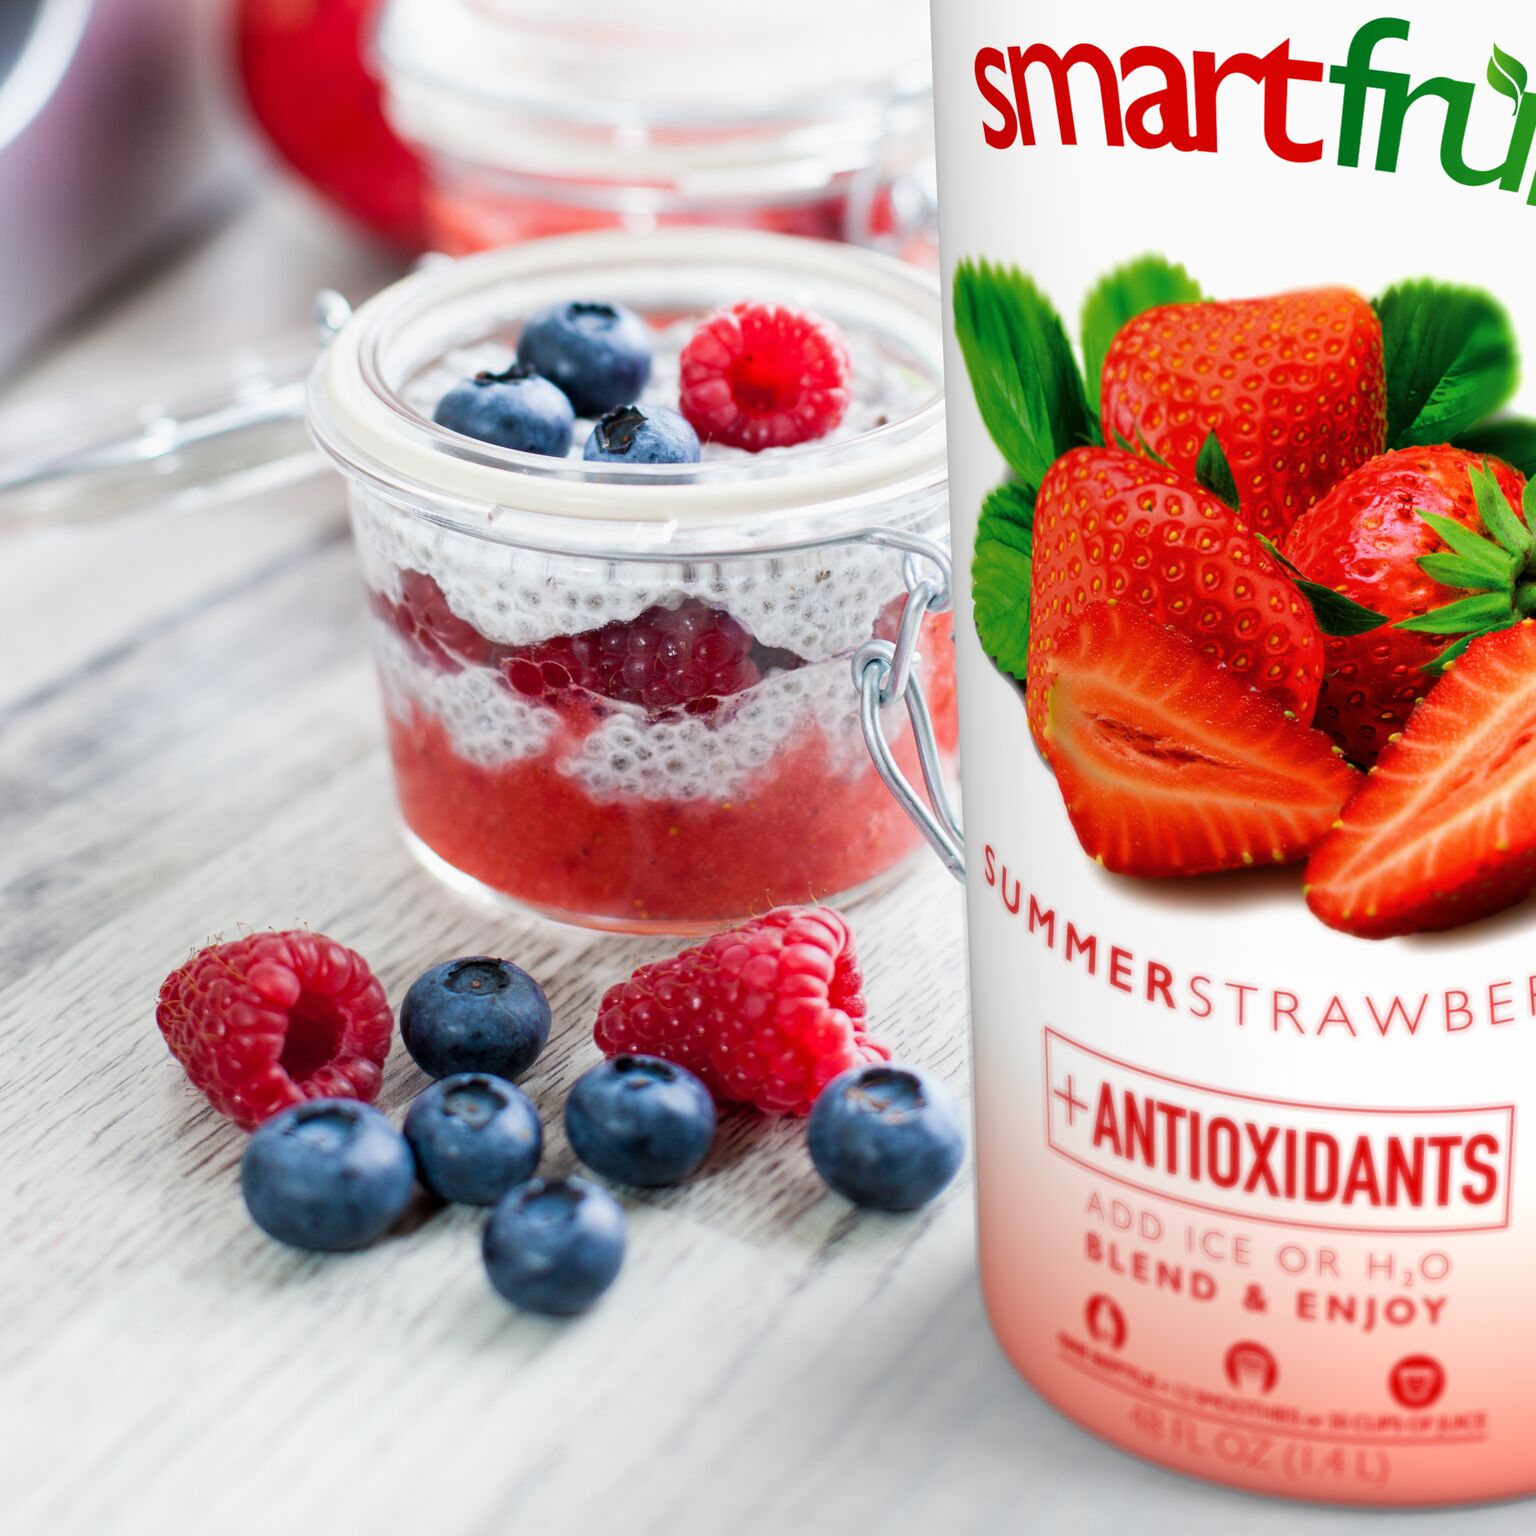 Revolutionized Over-Night Oats Made Using Smartfruit Summer Strawberry +Antioxidants